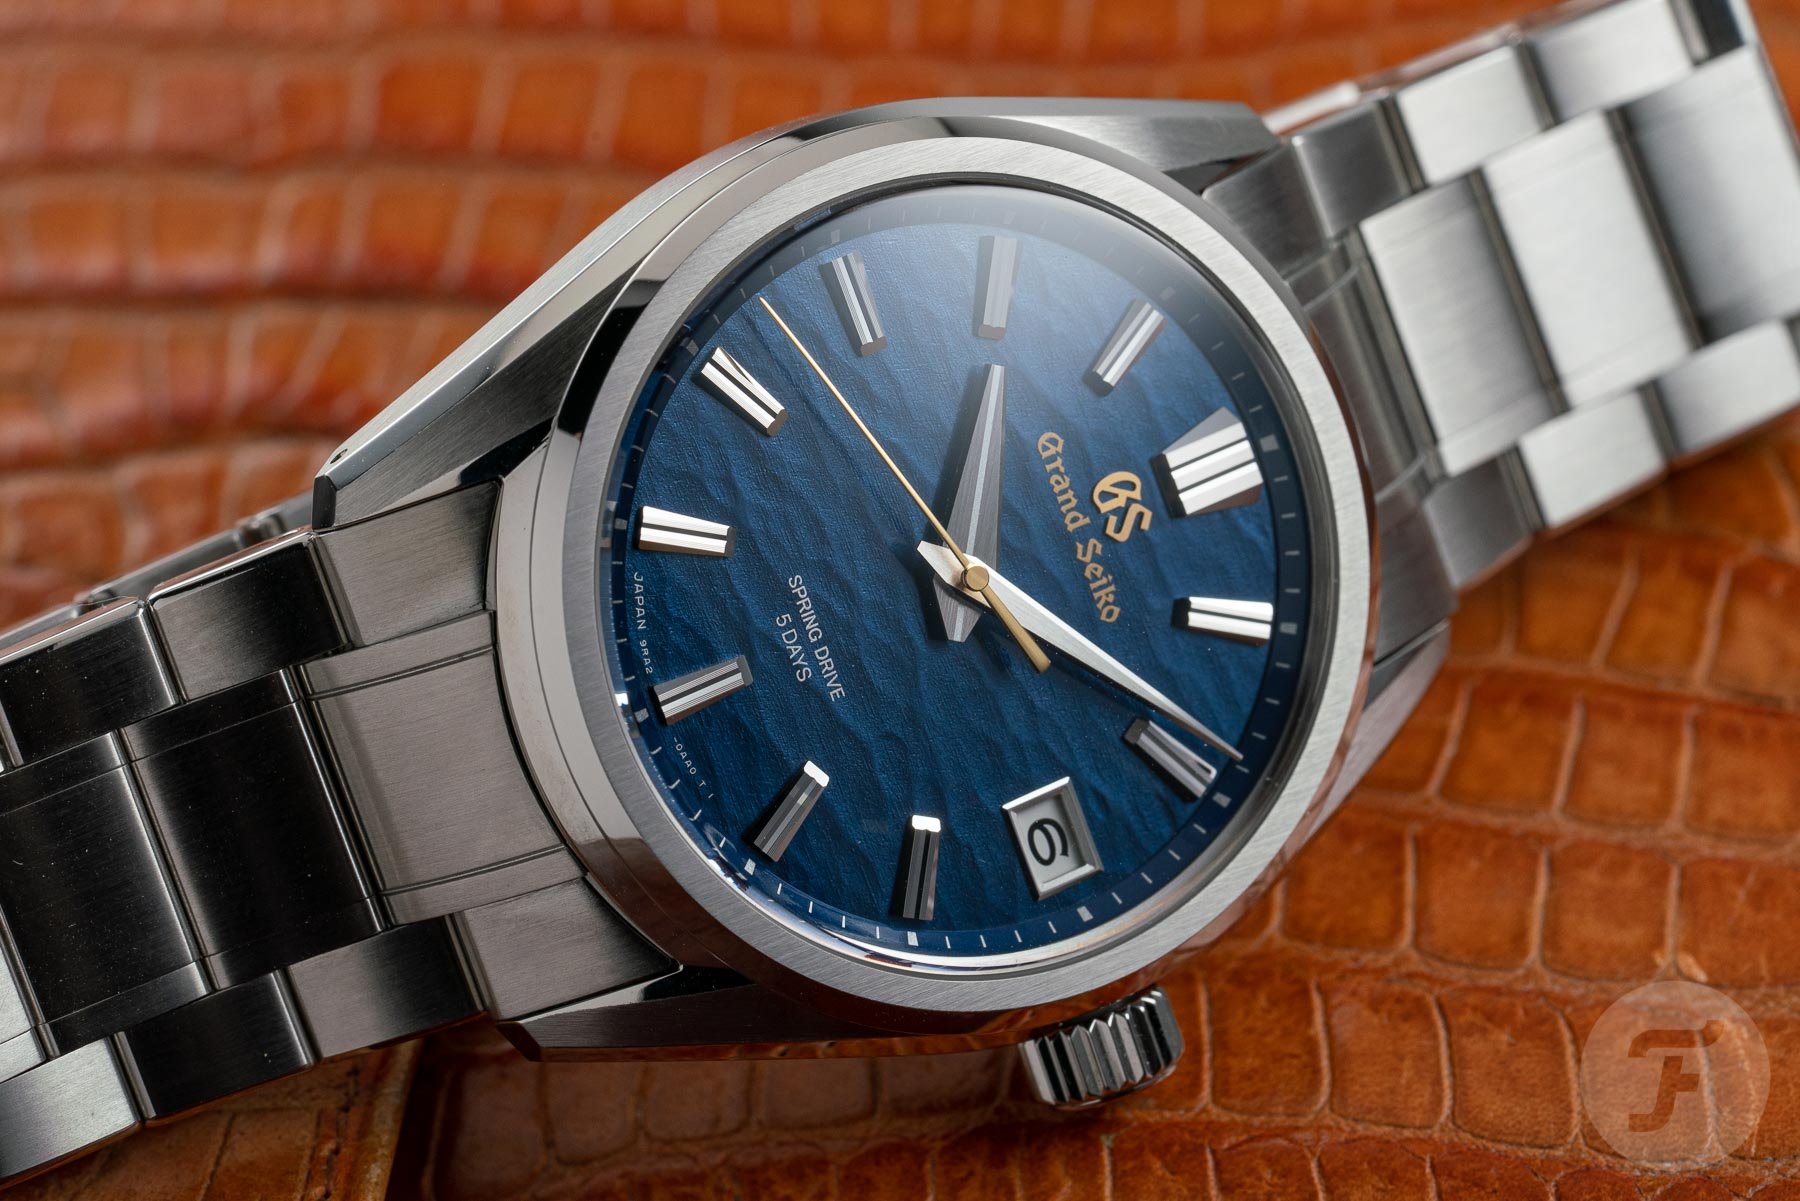 The Grand Seiko SLGA007 Limited Edition Watch (2021)